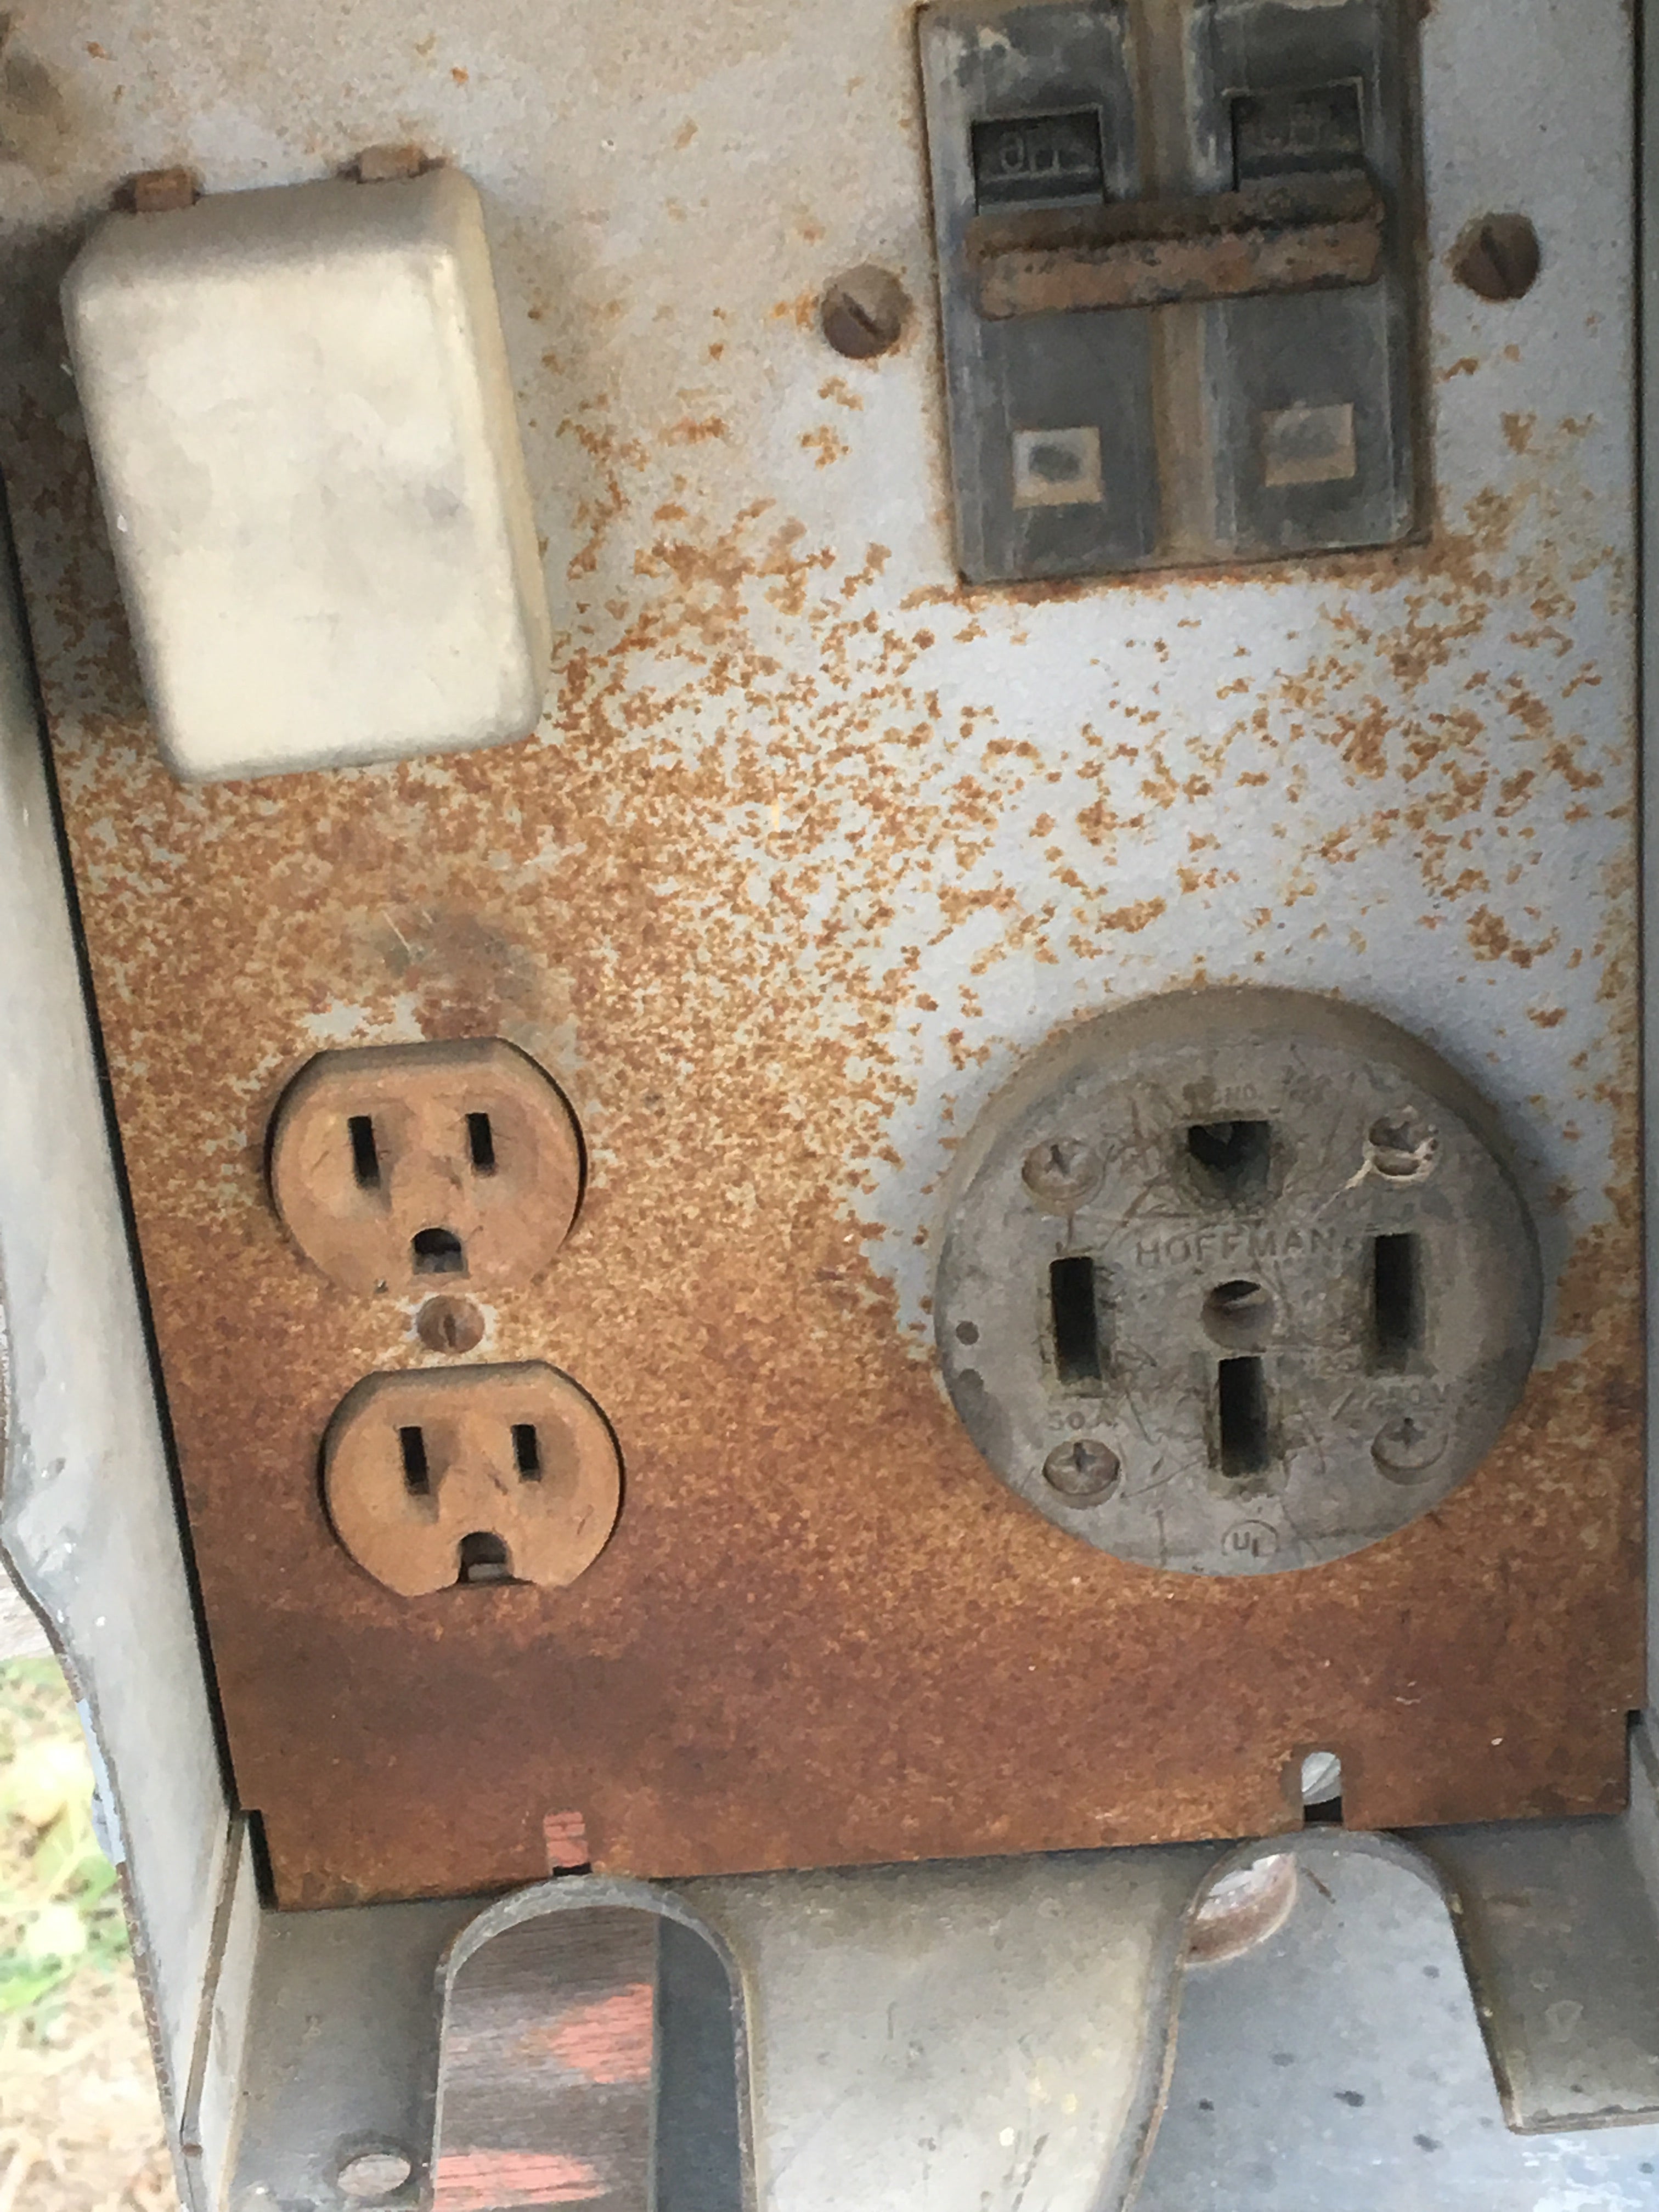 The lower left plug didn’t work